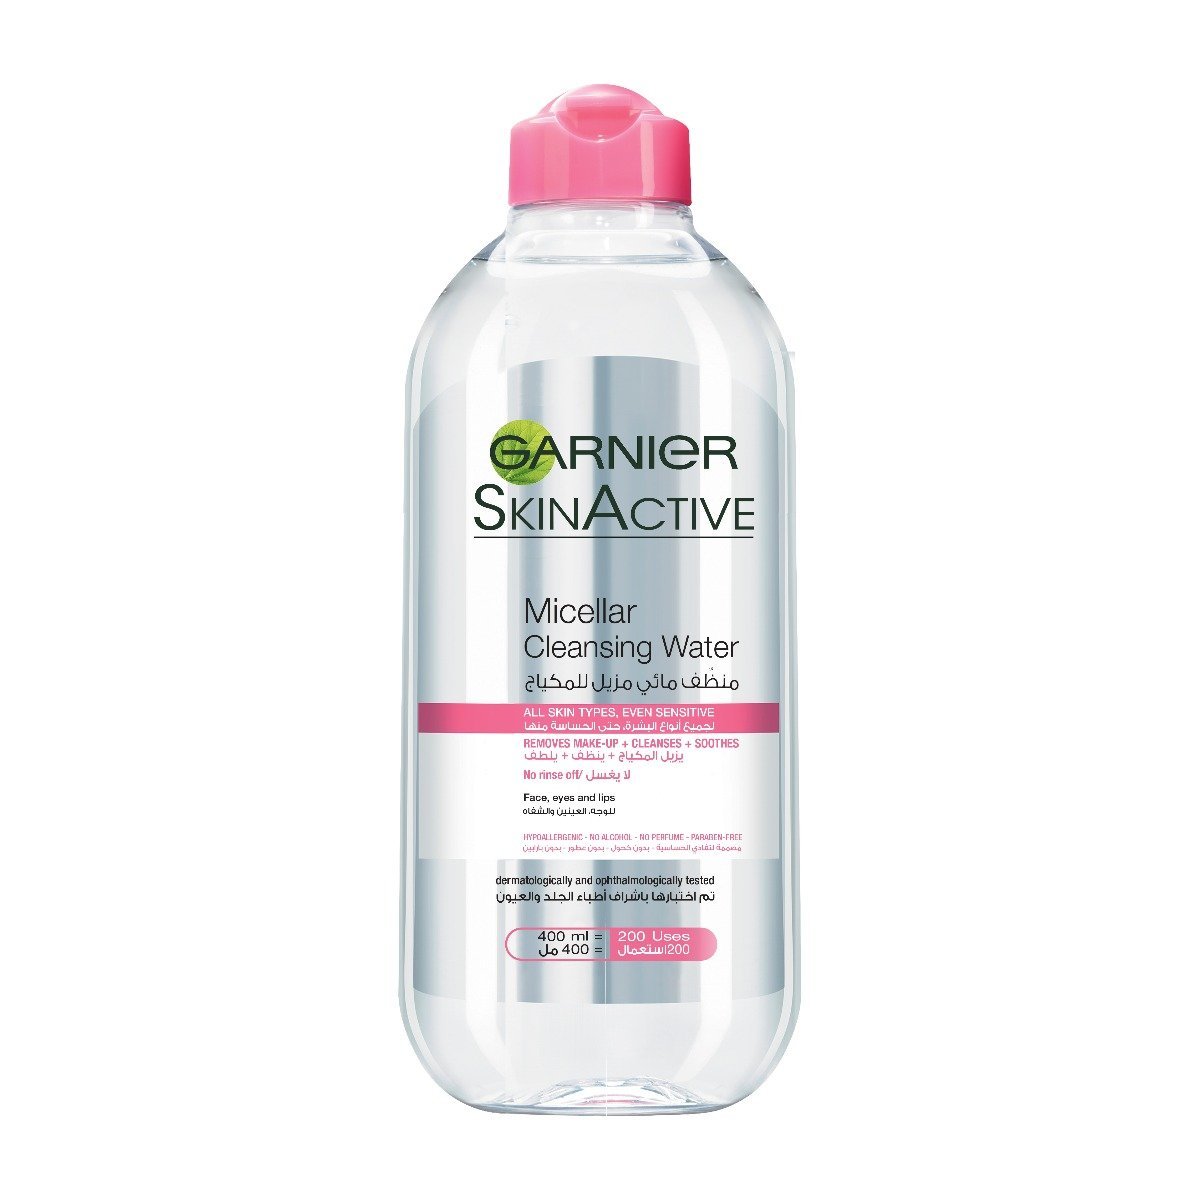 Garnier Micellar Cleansing Water For Sensitive Skin